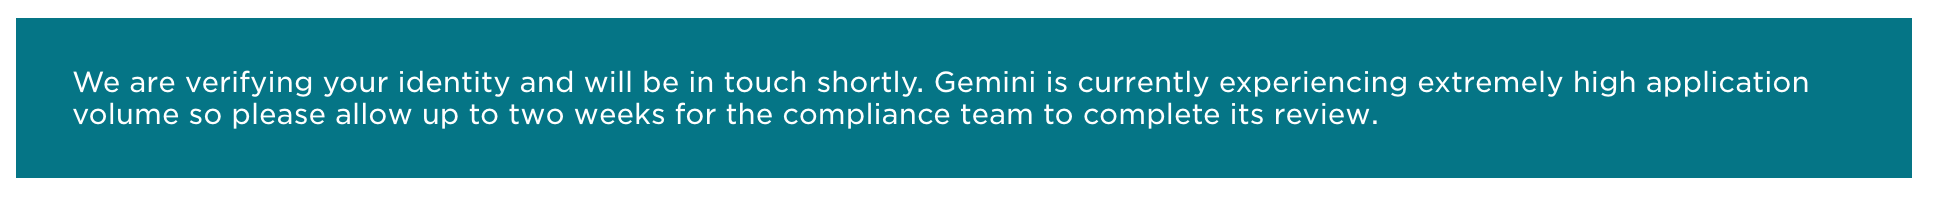 gemini-verification-warning